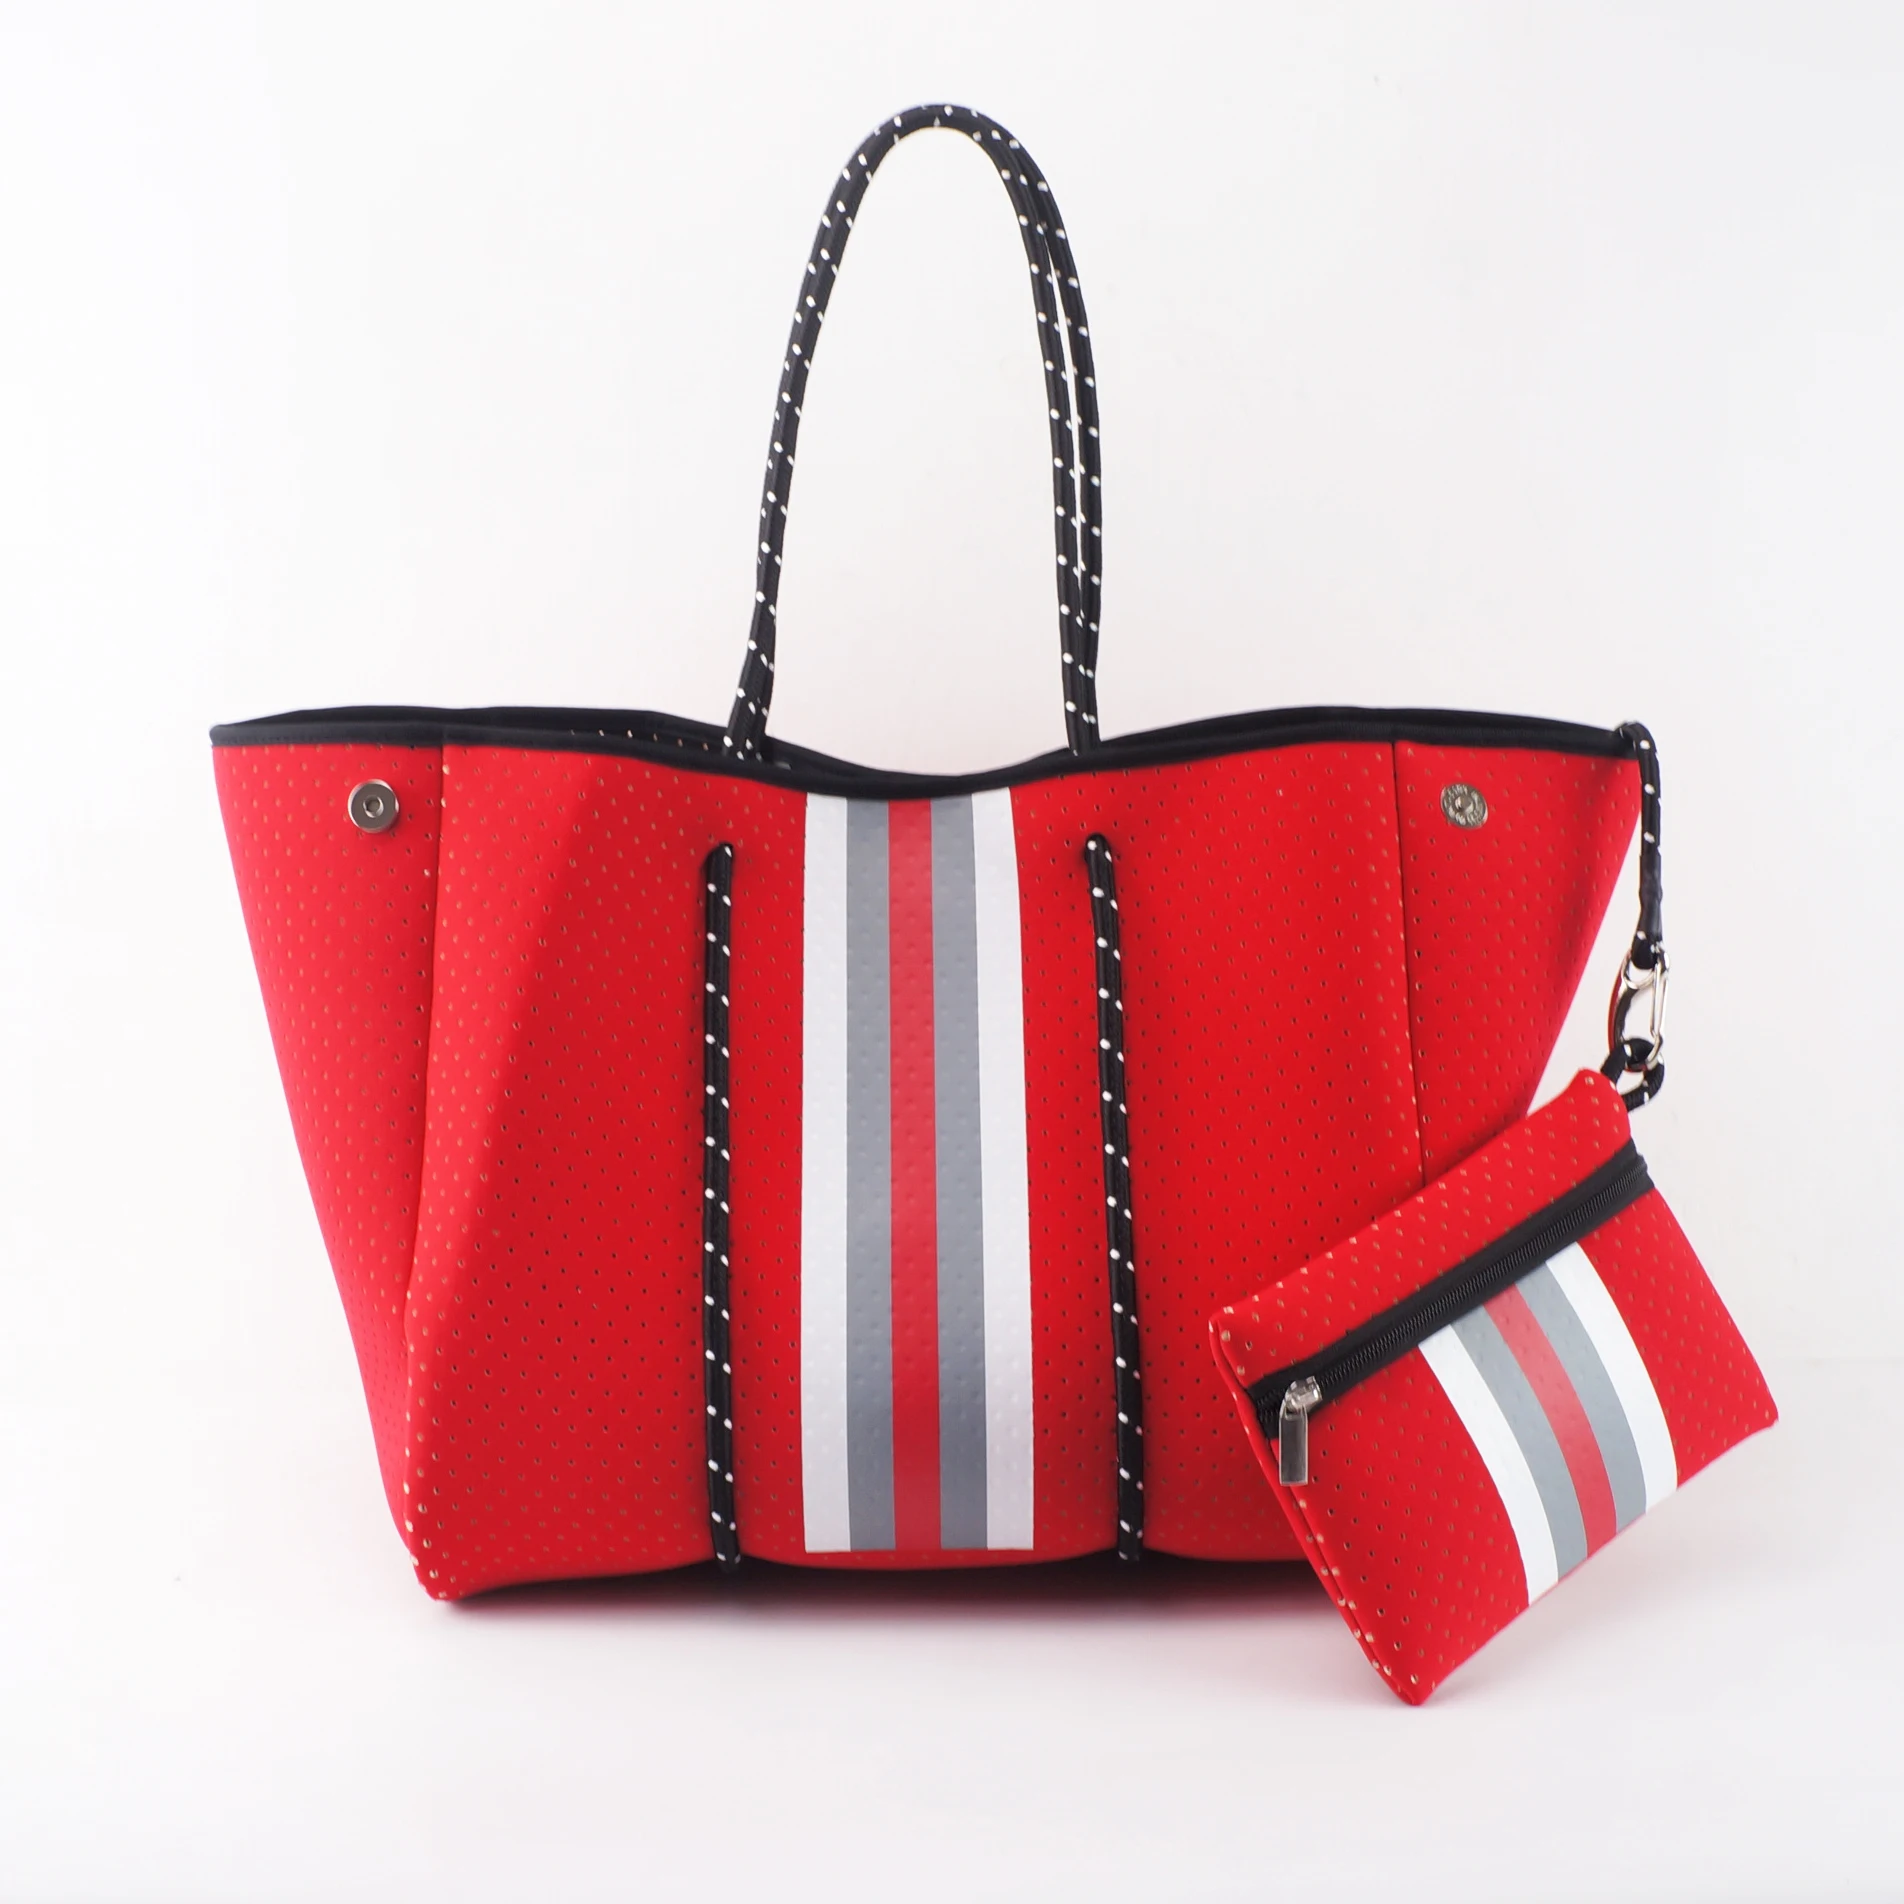 

2021 Lady tote hand bag Super Hot Selling Perforated Neoprene Bag Beach Bag women handbags, Sample or customized